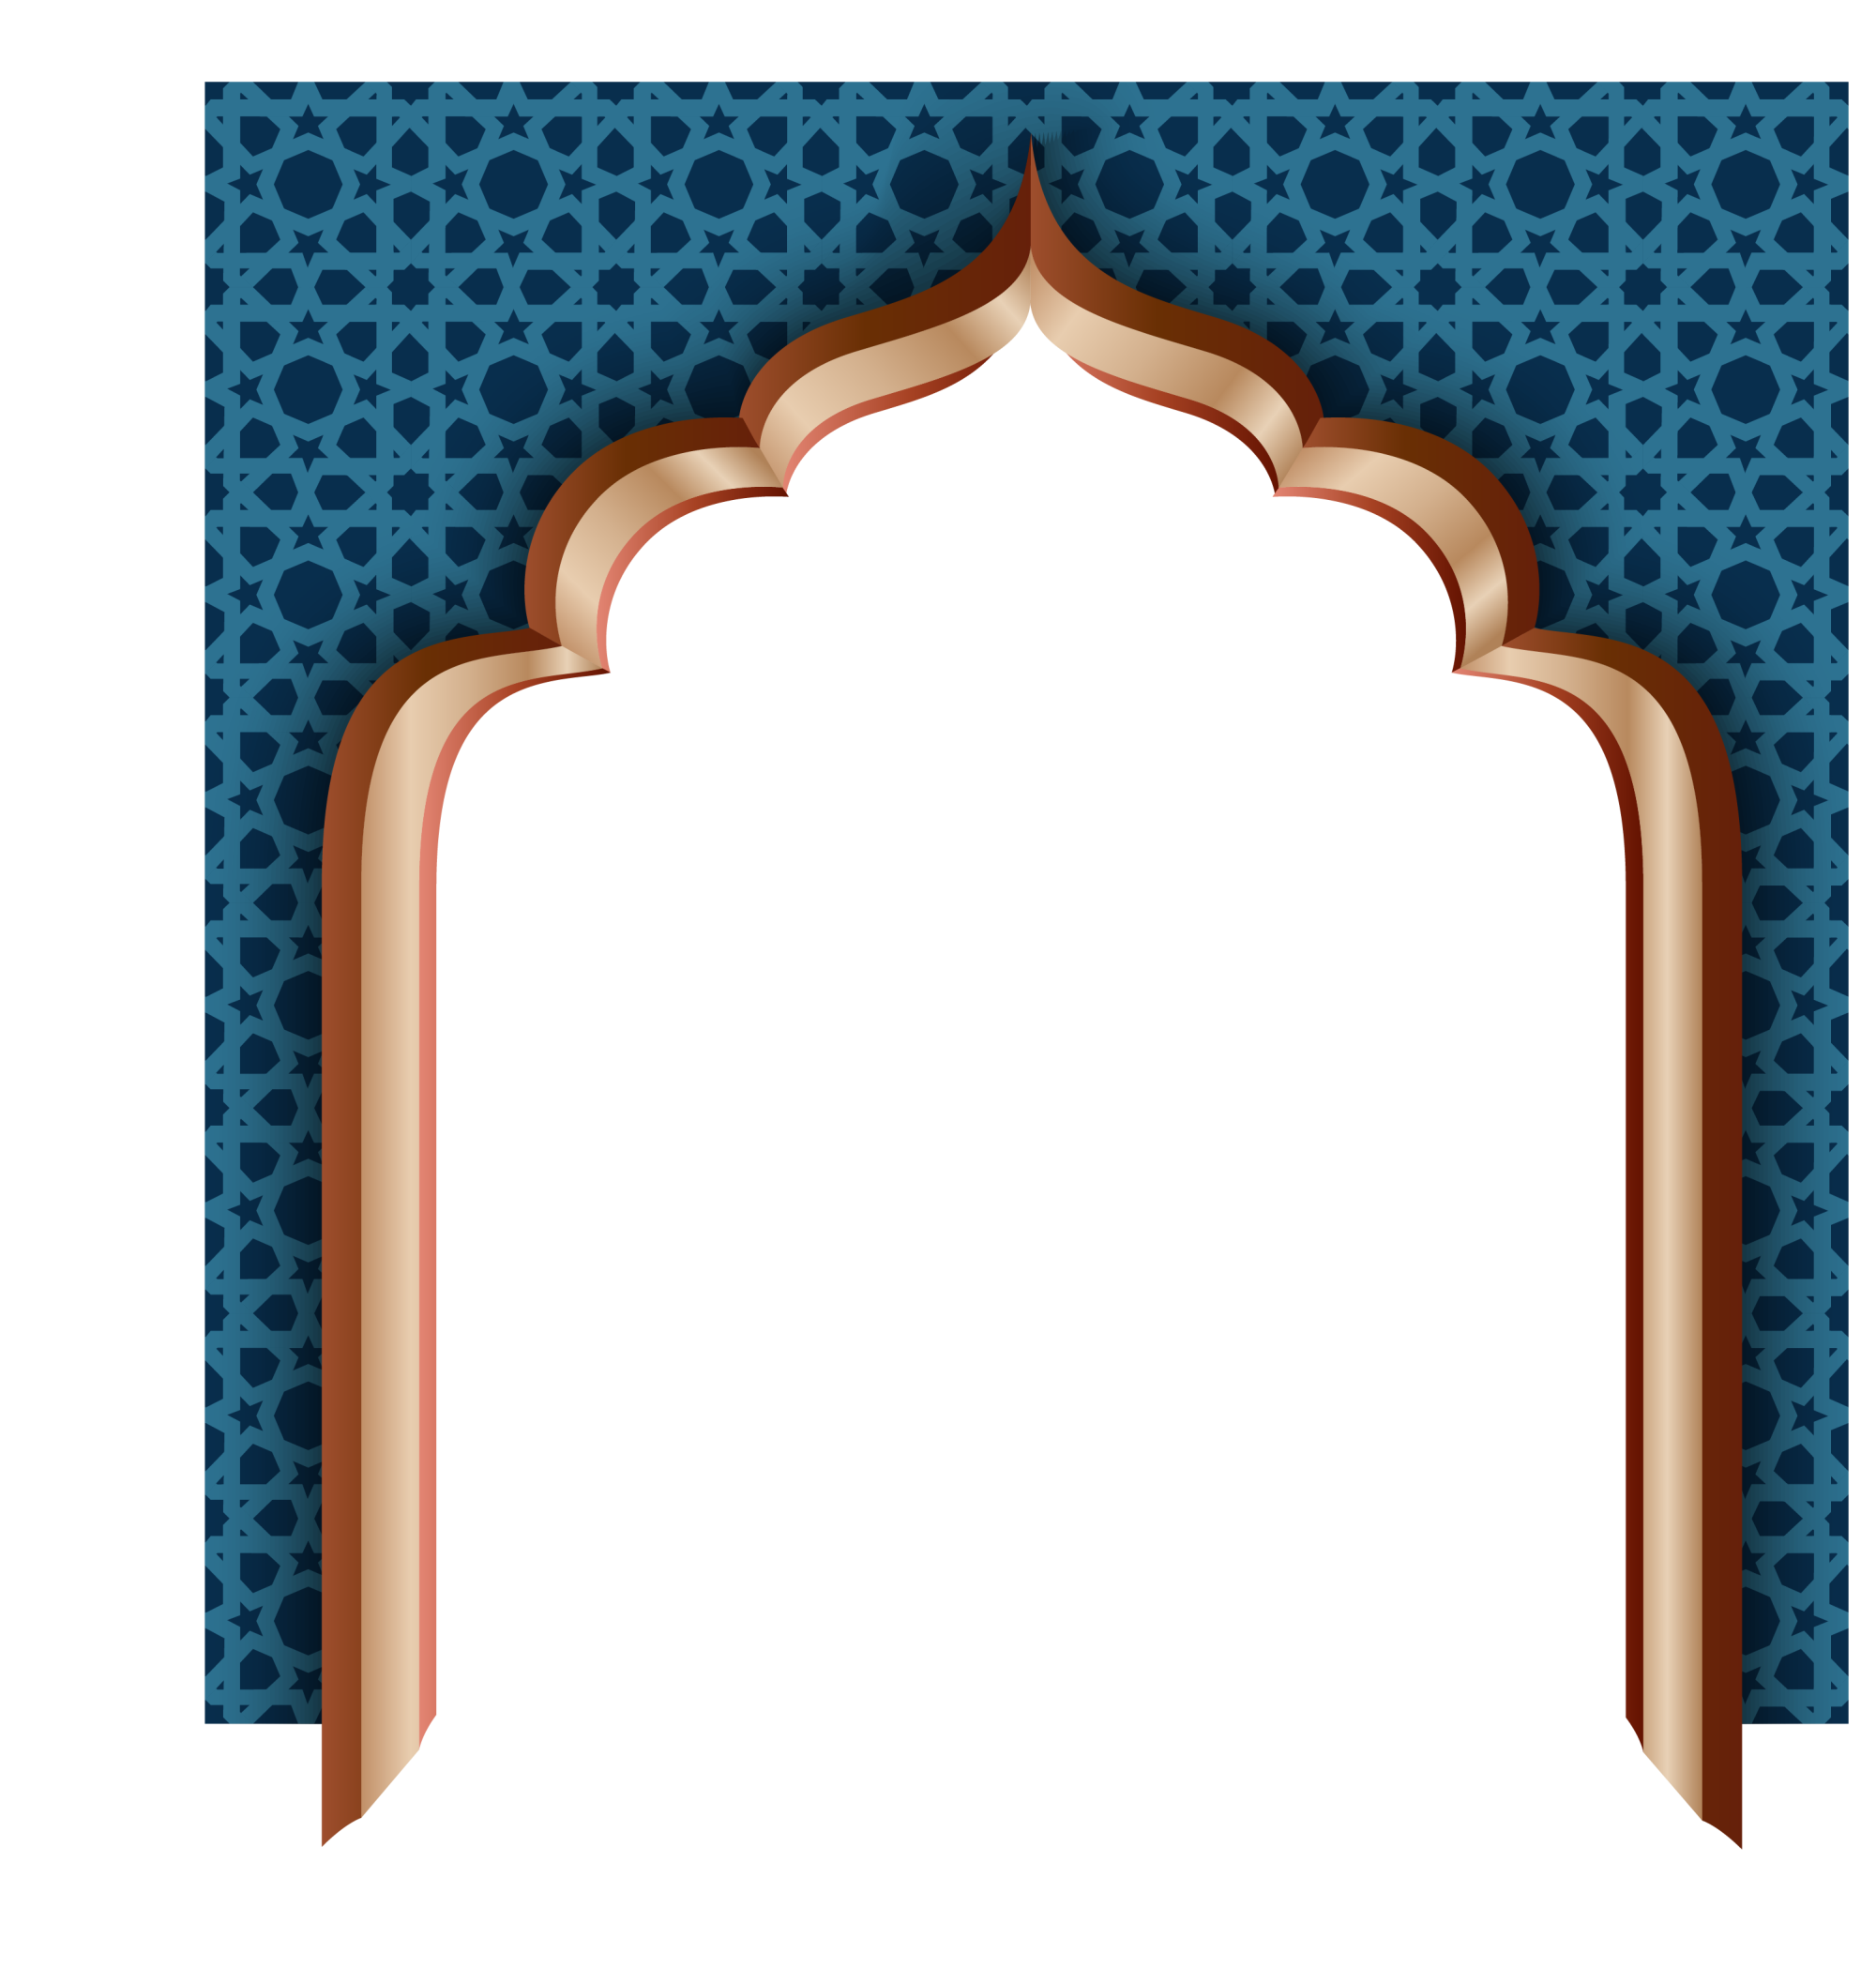 Мусульманские рамки. Рамадан мубарак рамка вектор. Восточная арка. Арка в Восточном стиле. Рамка мусульманская.